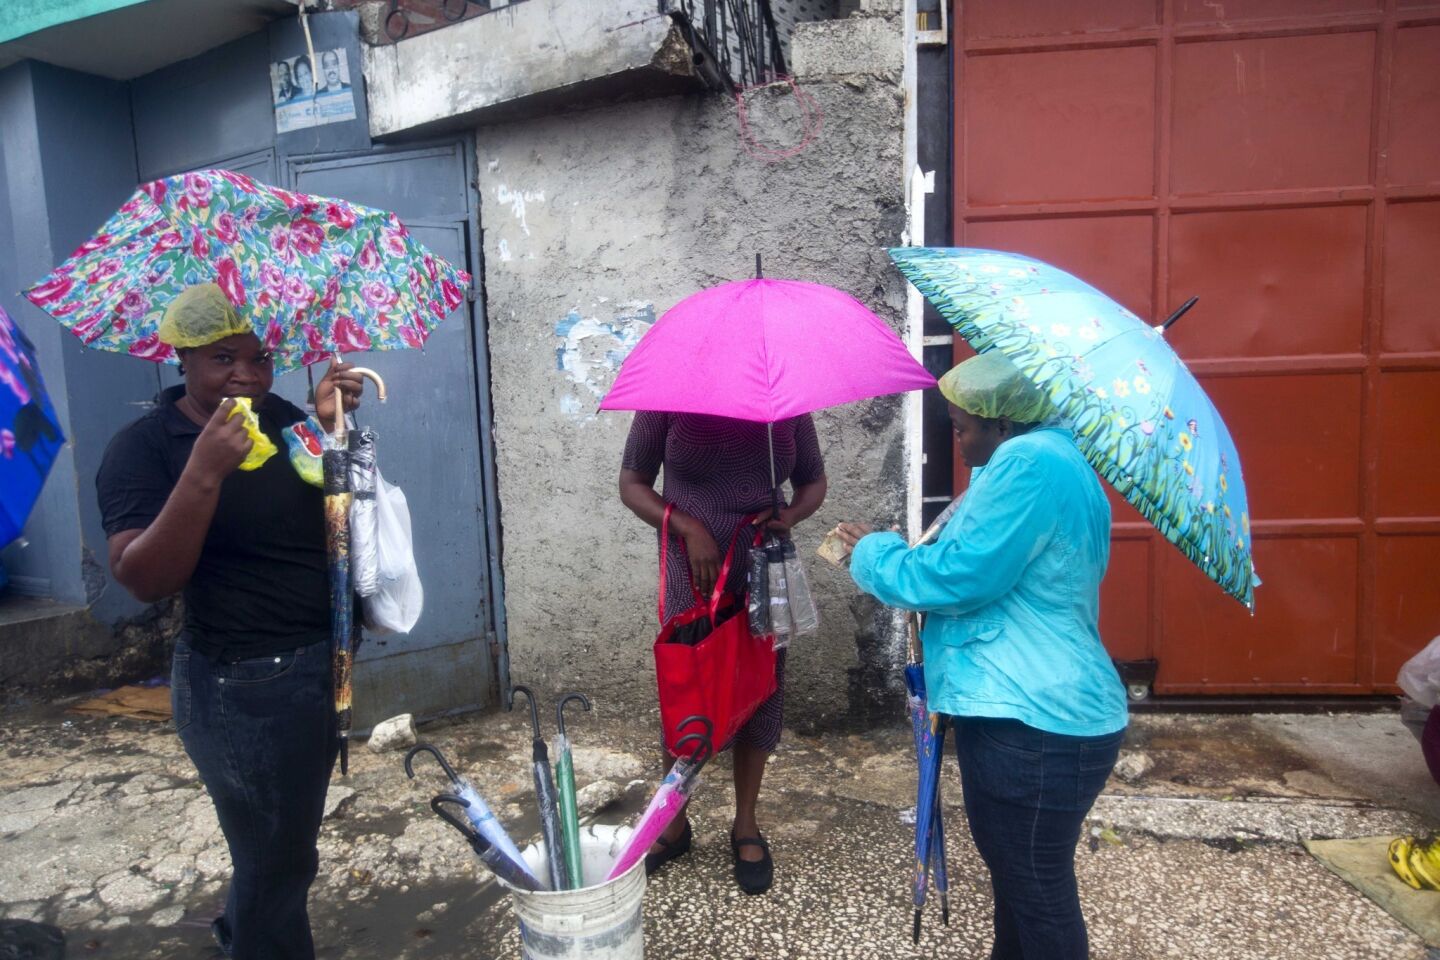 Women sell umbrellas during the arrival of Hurricane Matthew in Port-au-Prince, Haiti.